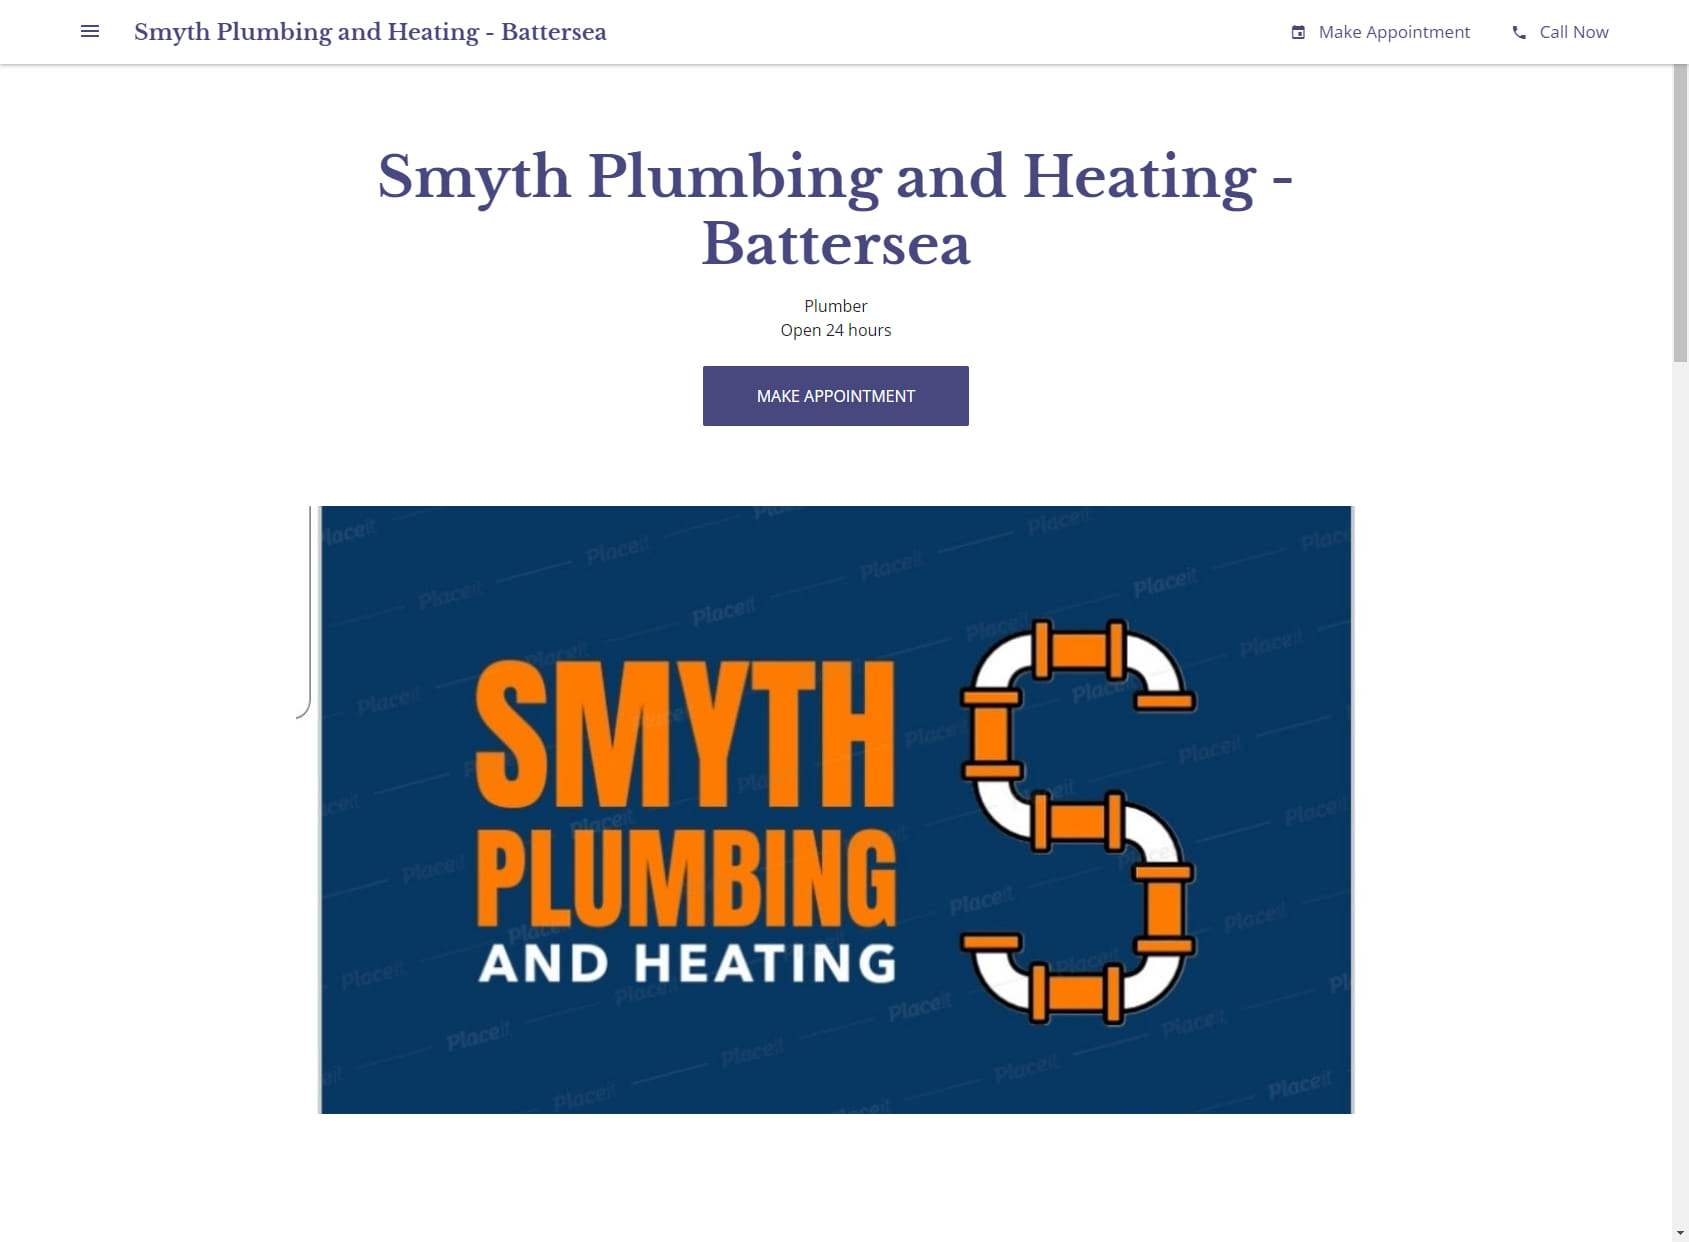 Smyth Plumbing and Heating